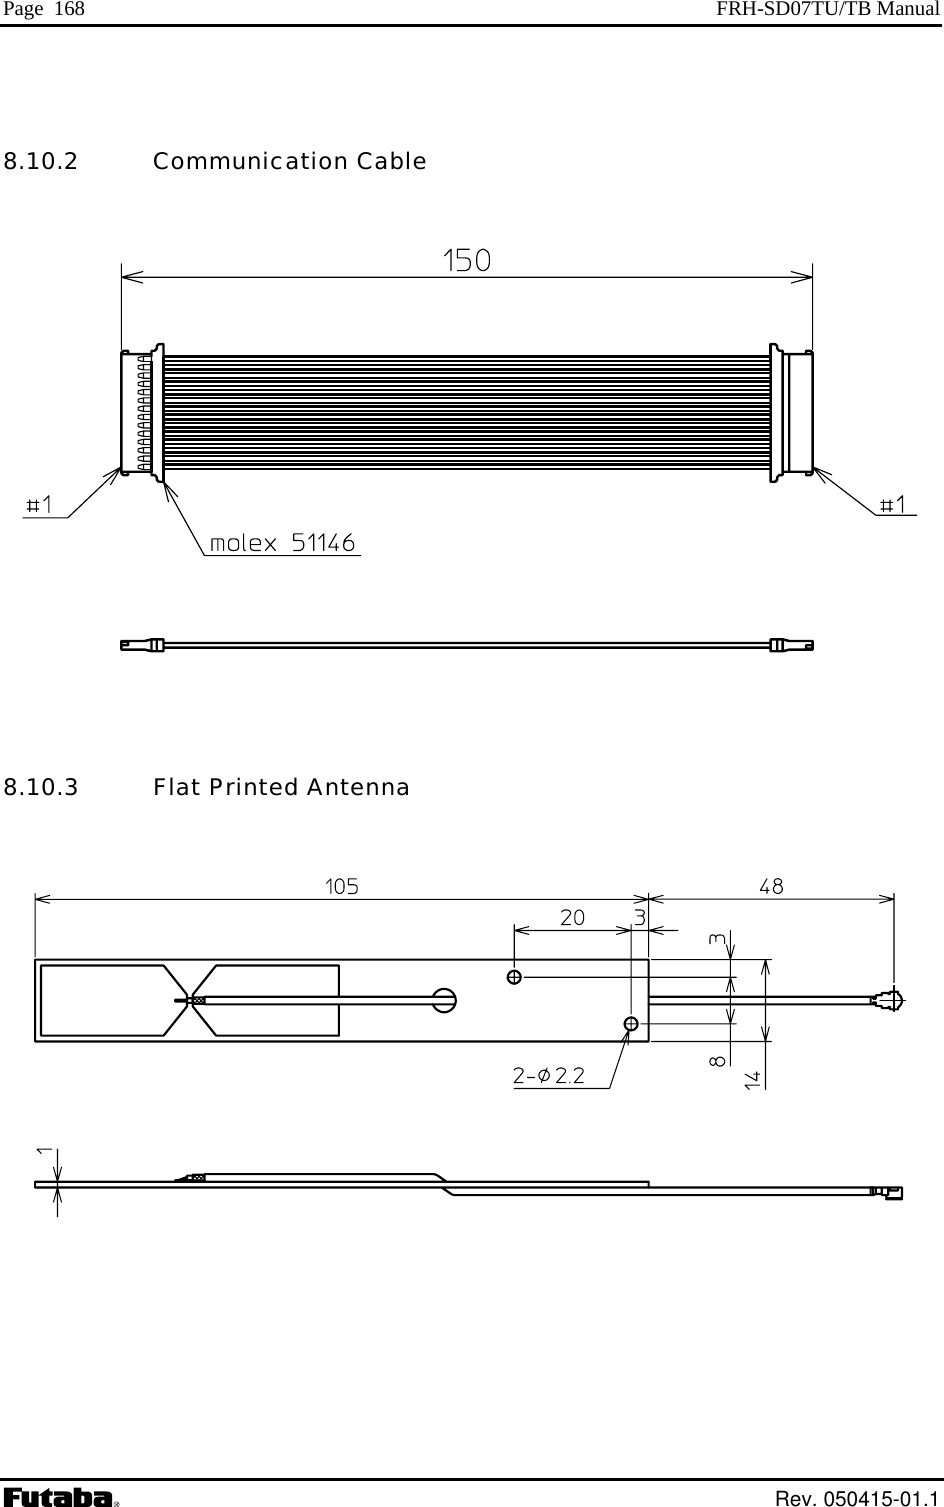 Page  168  FRH-SD07TU/TB Manual  8. unic e  10.2   Com ation Cablm   8.10.3   Flat Printed Antenna         Rev. 050415-01.1 